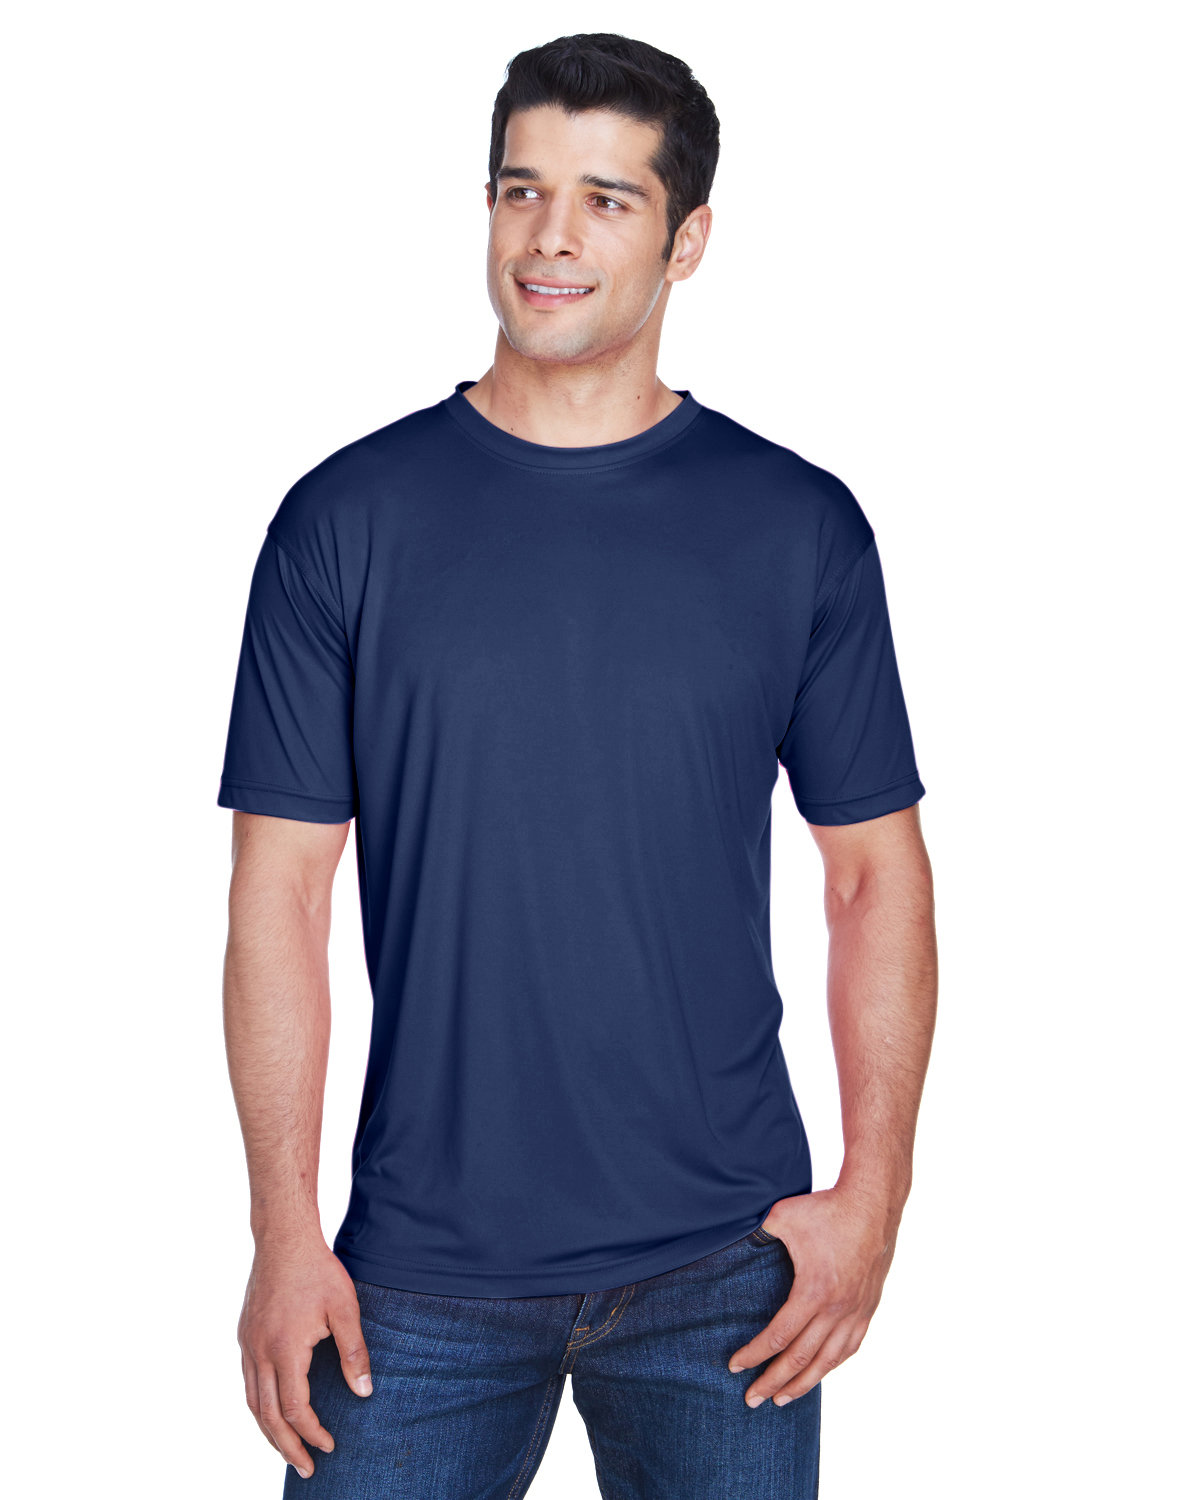 UltraClub Men's Cool & Dry Sport Performance Interlock T-Shirt navy 